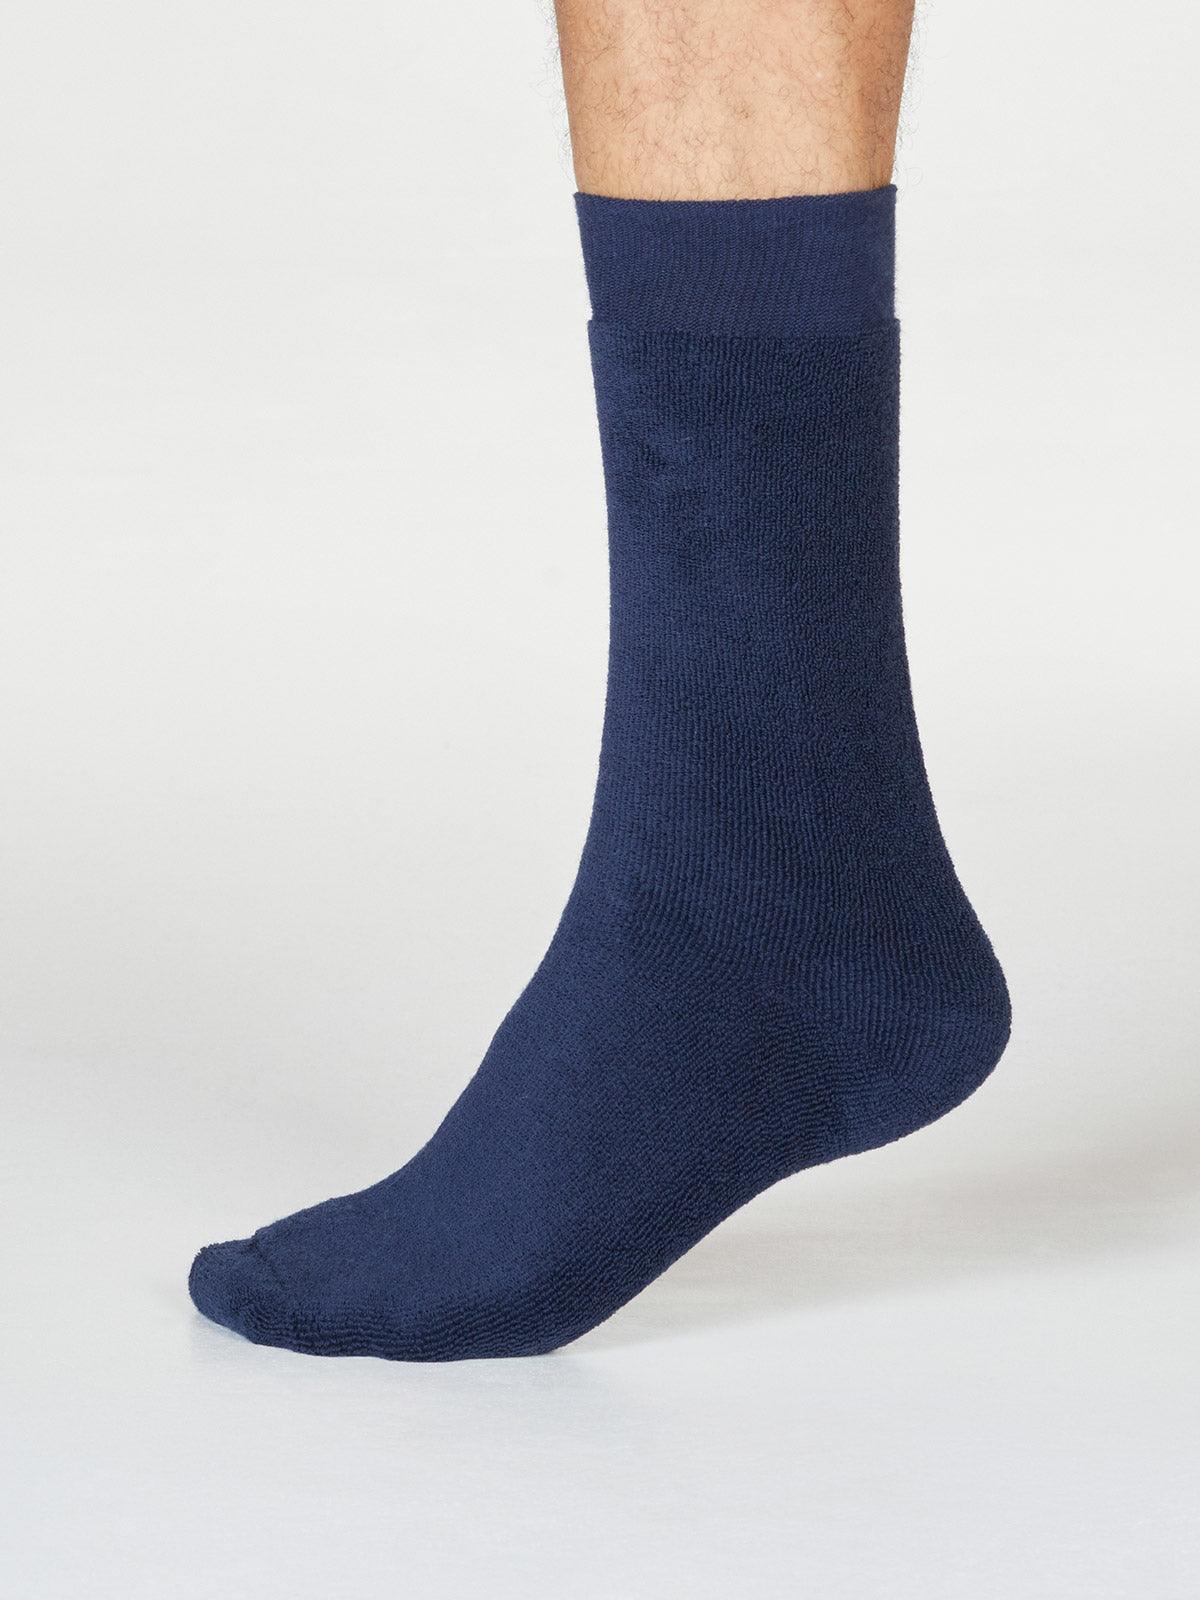 Walker Socks - Navy Blue - Thought Clothing UK